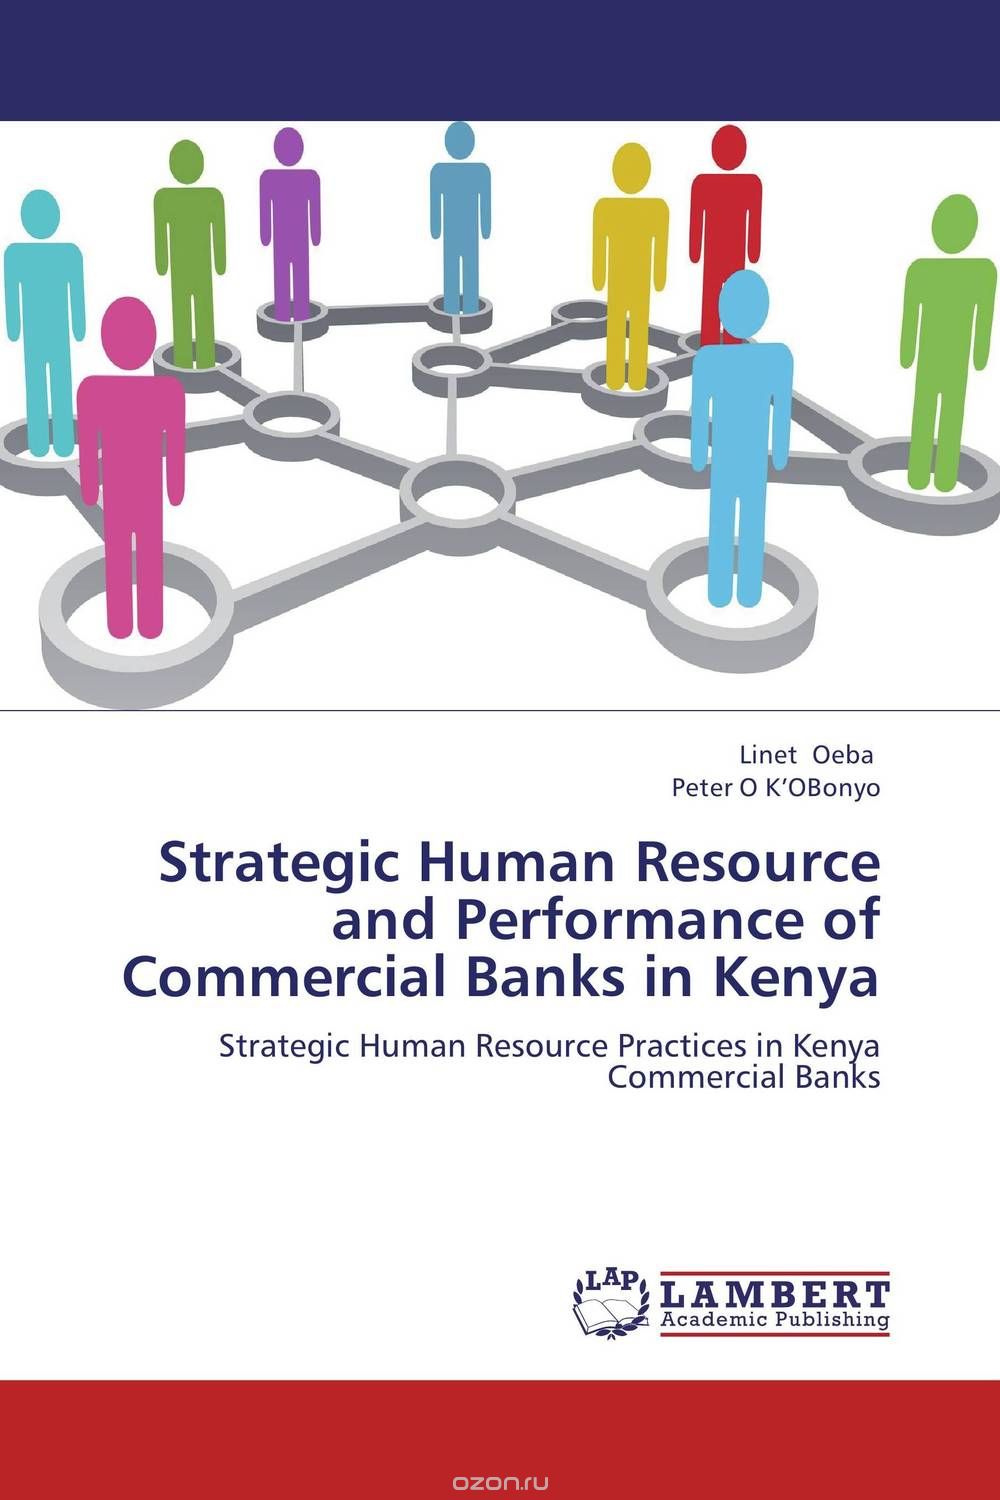 Скачать книгу "Strategic Human Resource and Performance of Commercial Banks in Kenya"